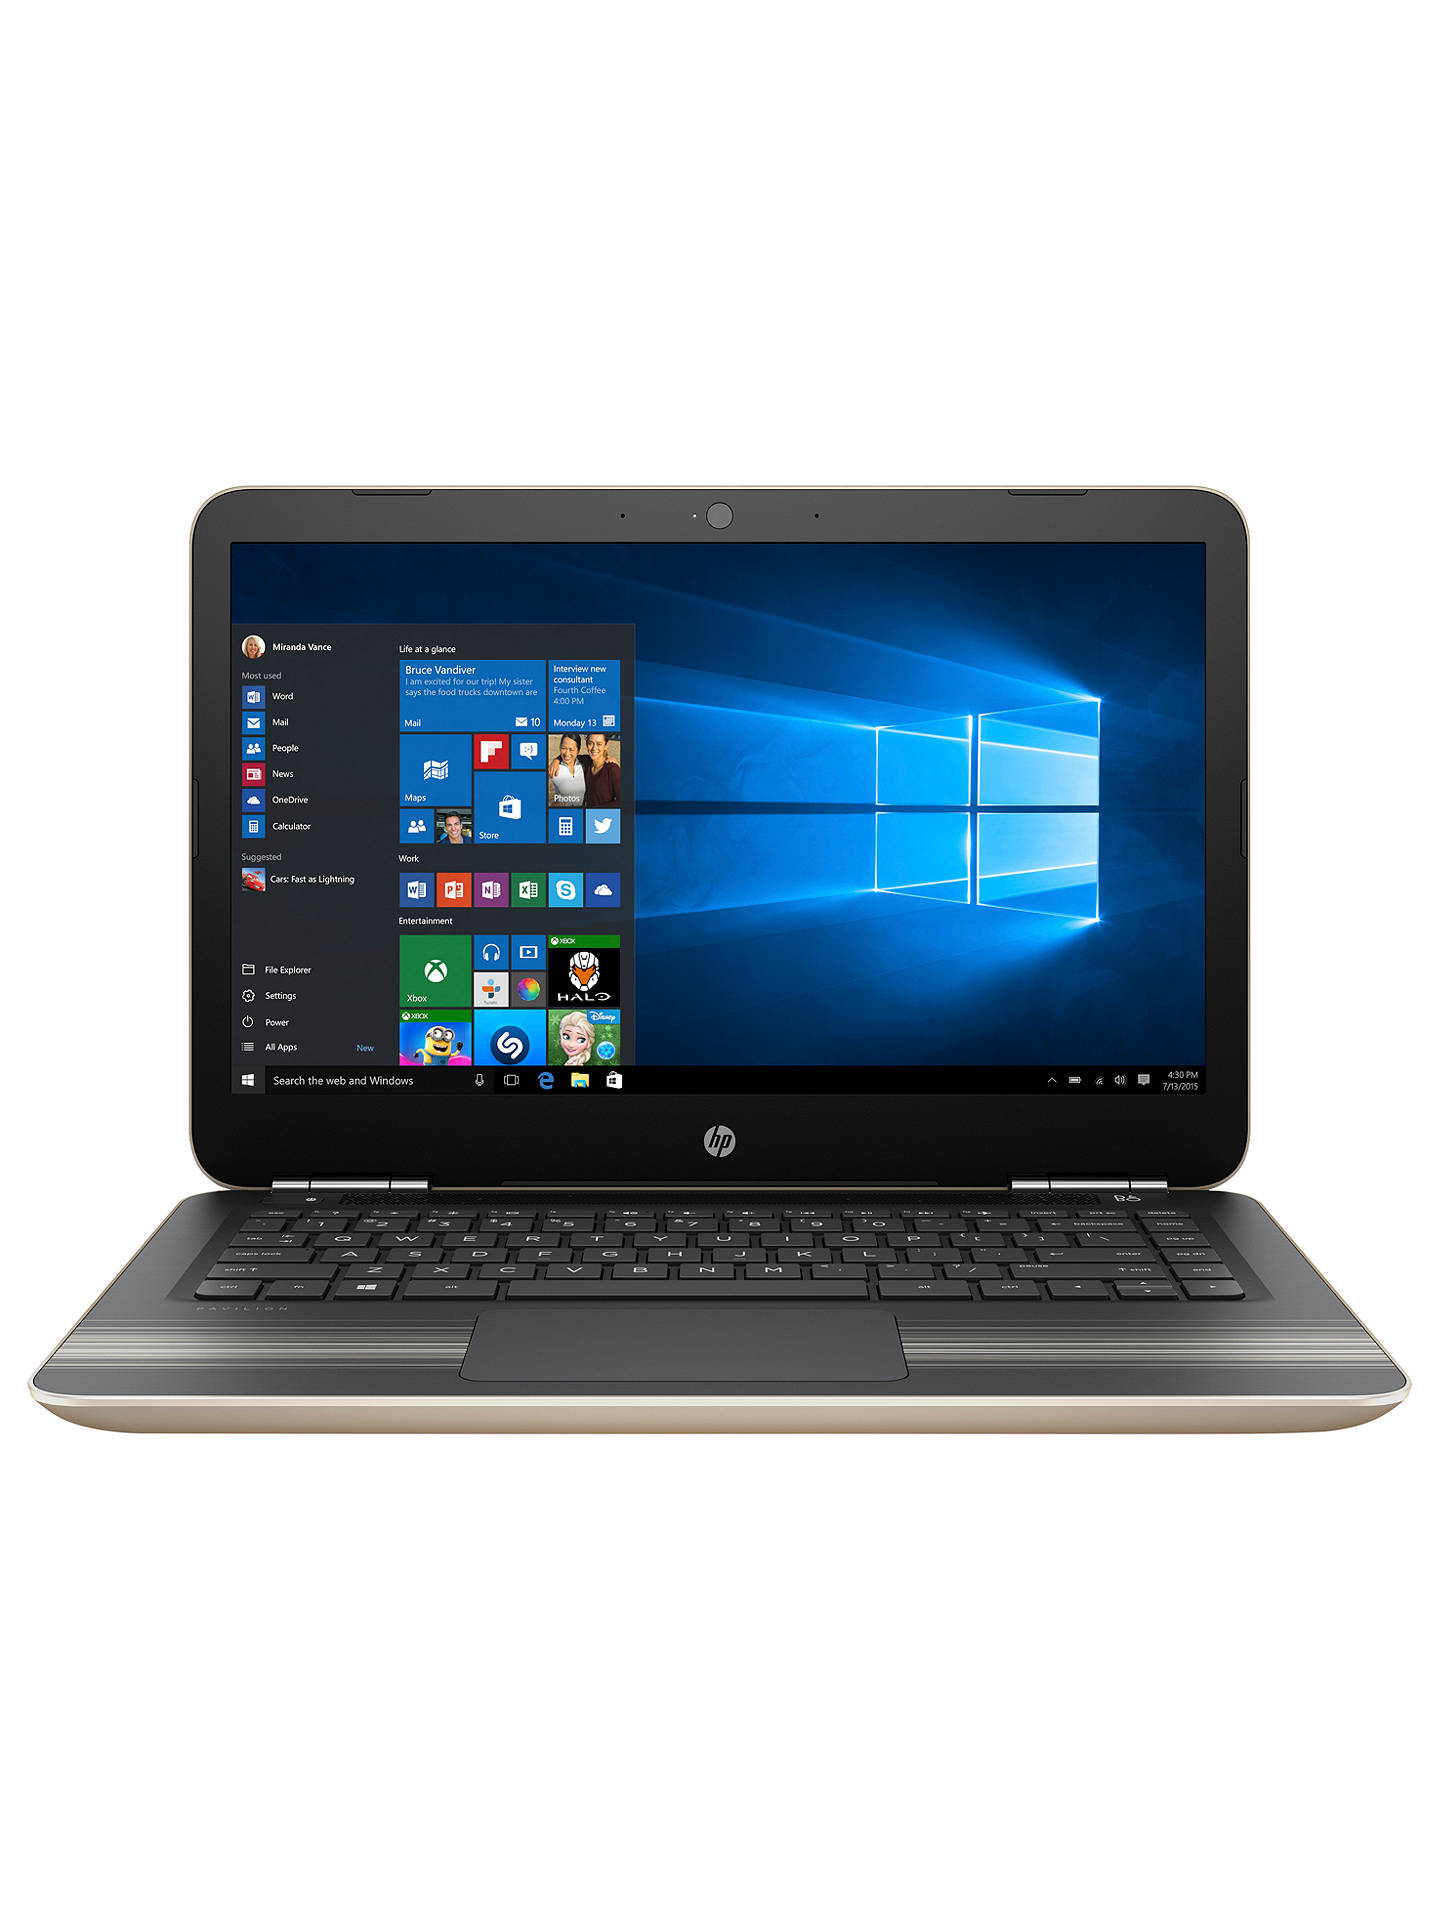 HP Pavilion 14-al118na Laptop, Intel Core i7, 8GB RAM, 256GB SSD, NVIDIA 940MX, 14" Full HD